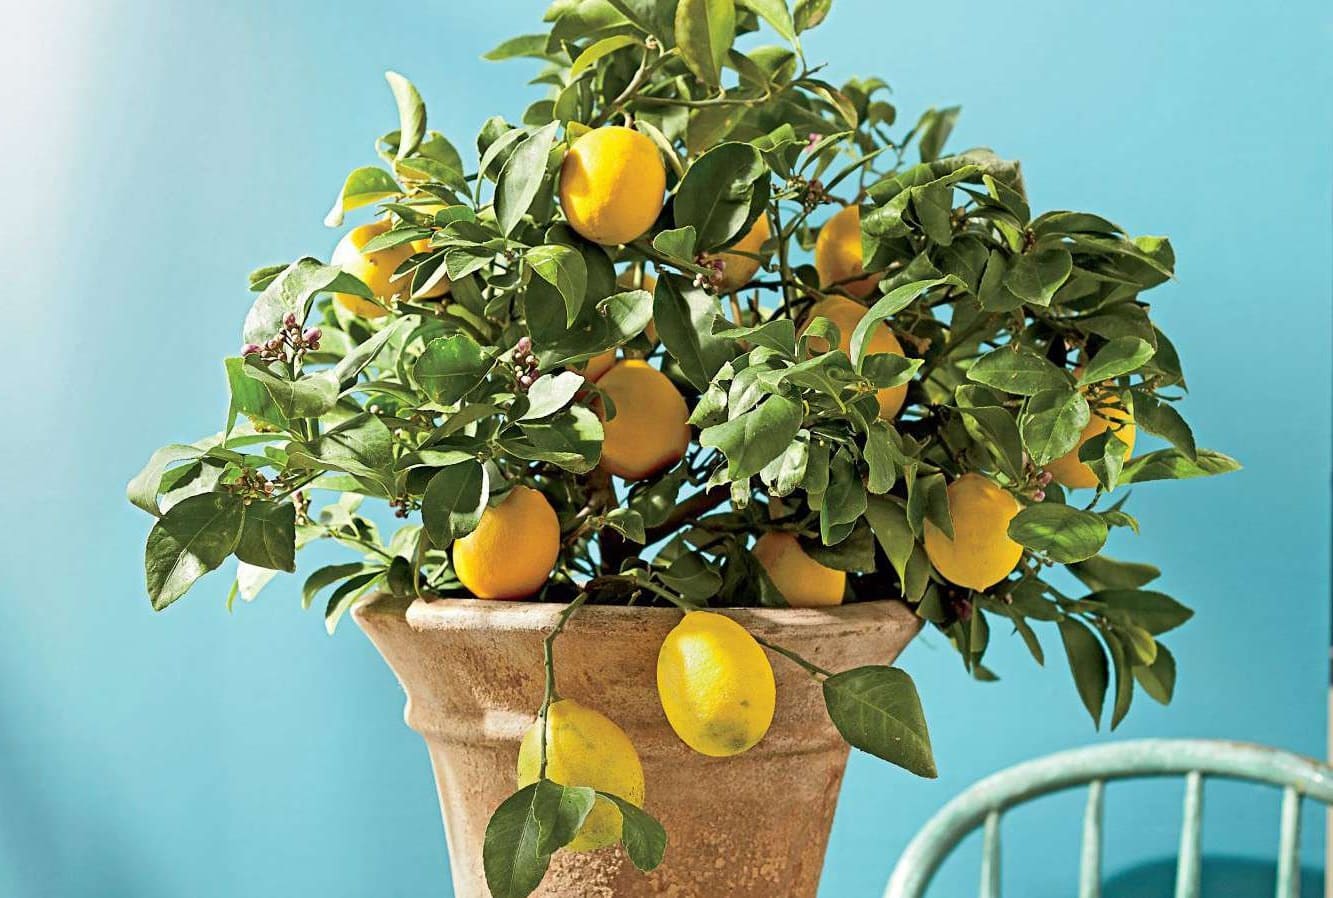 Tips For Caring For Your Meyer Lemon Tree